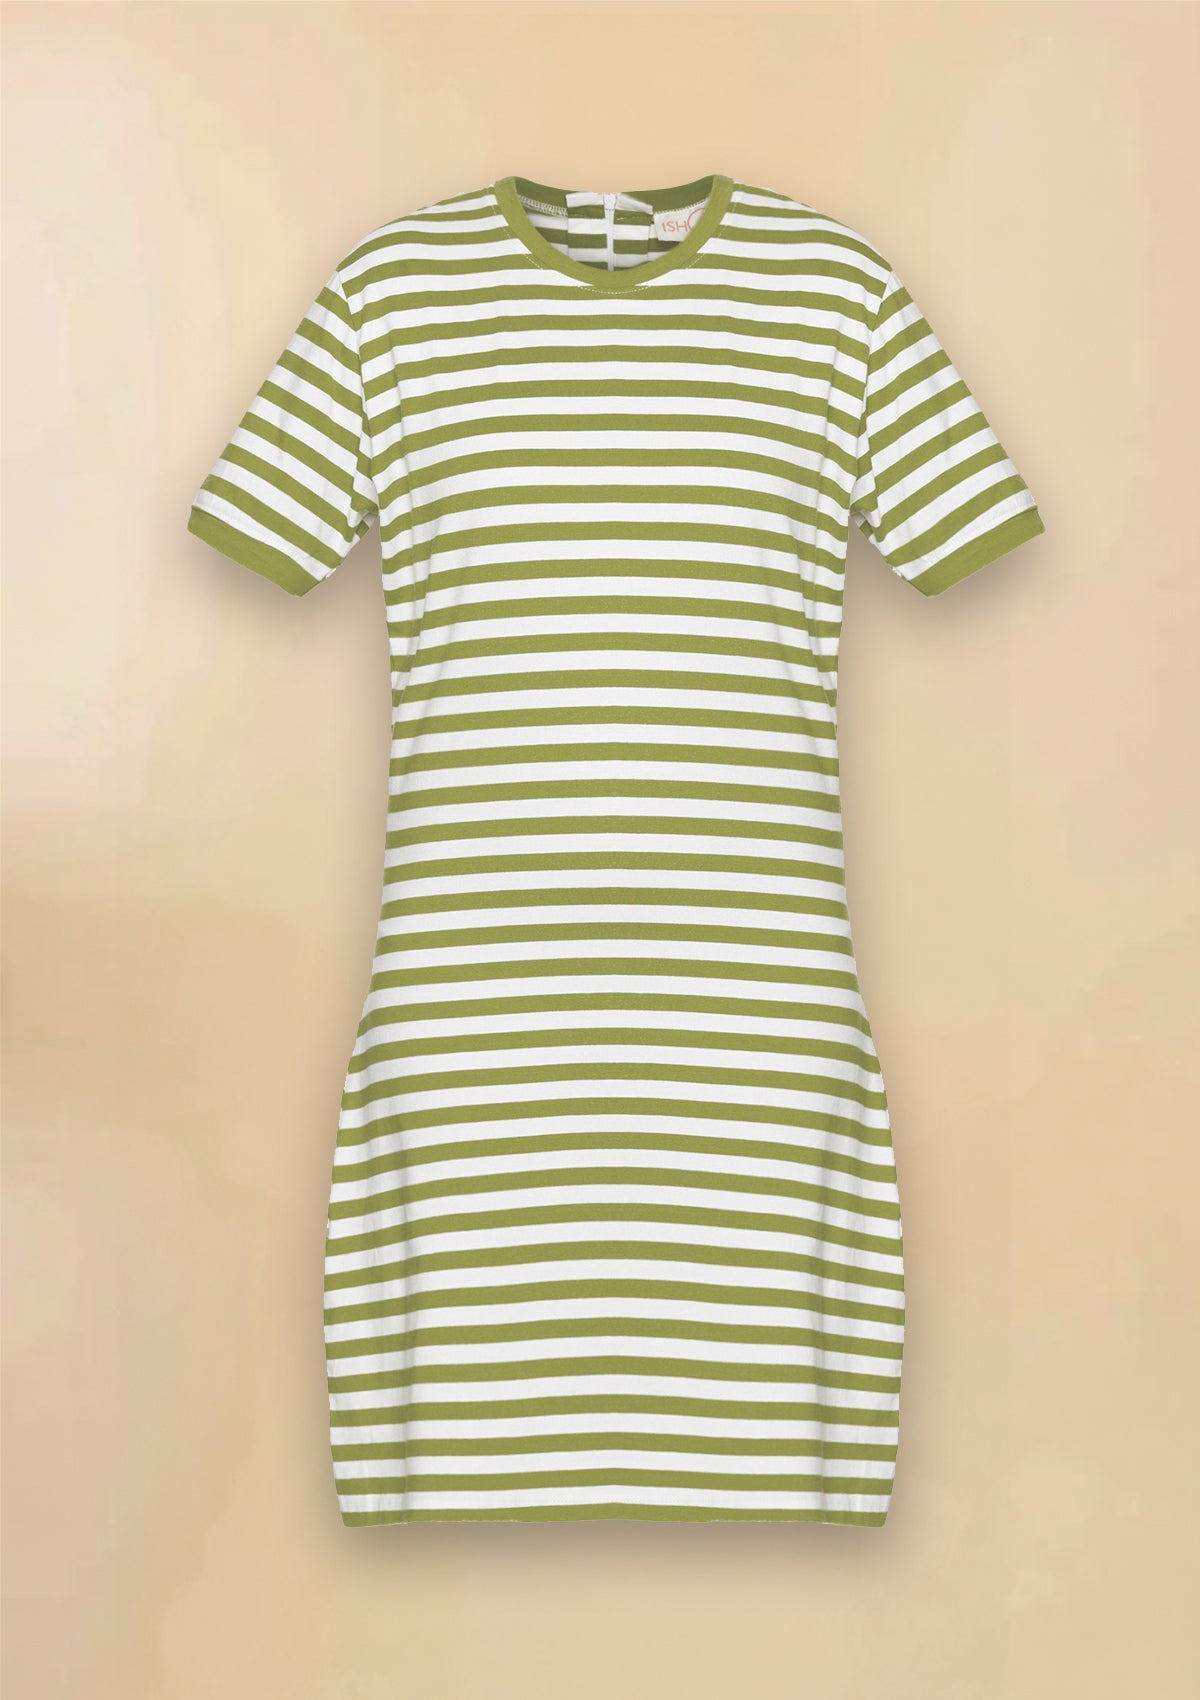 Lyra - Tan Denim Jacket with green striped T-shirt dress - IshqMe